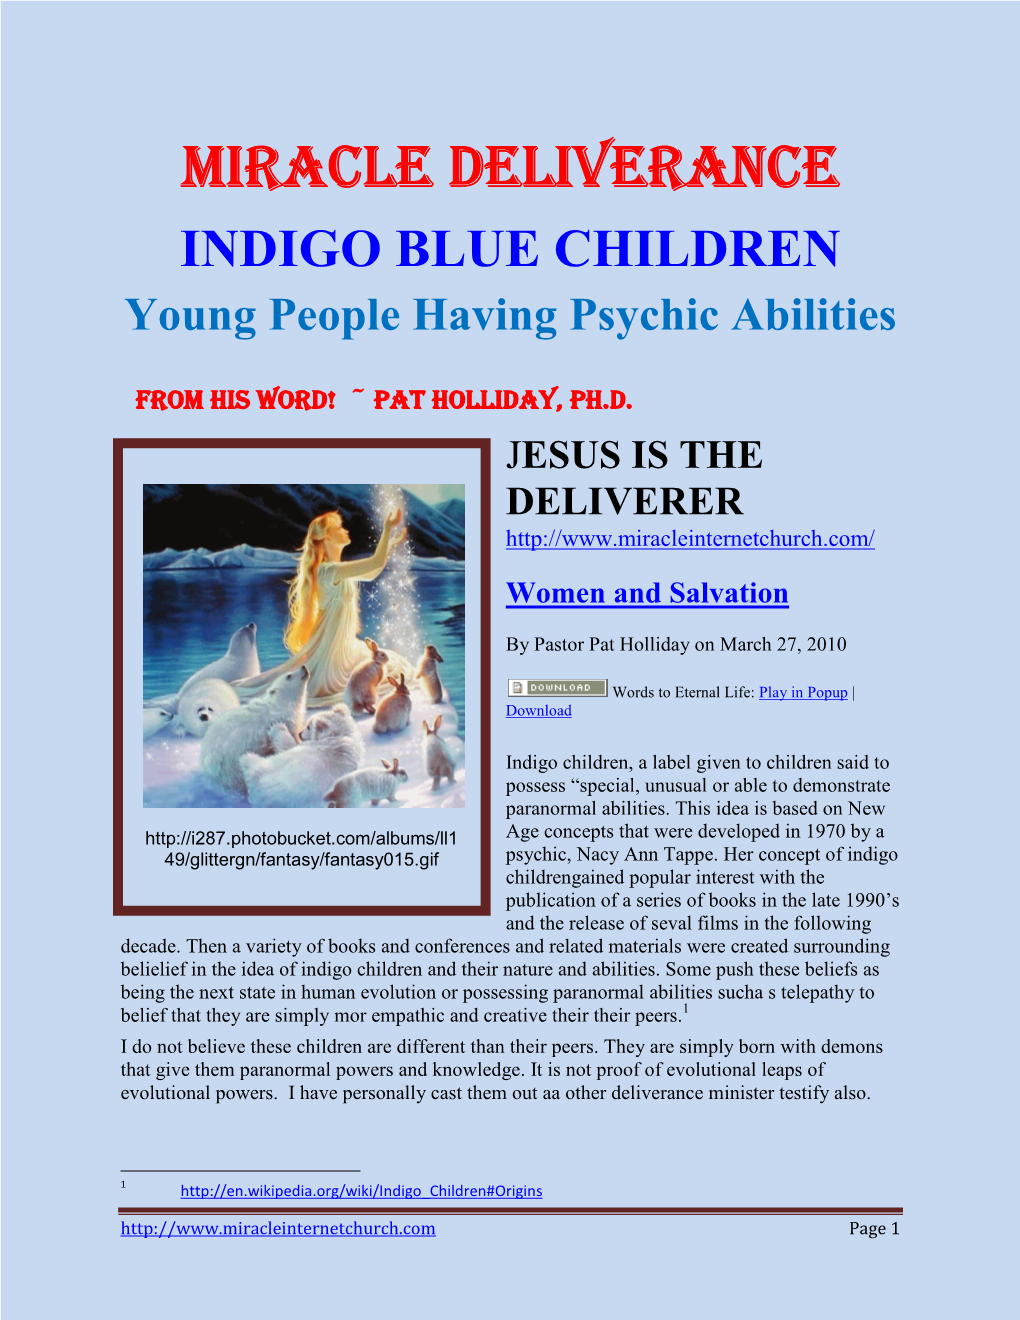 03-29-10 Indigo Blue Children and Psychic Abilities